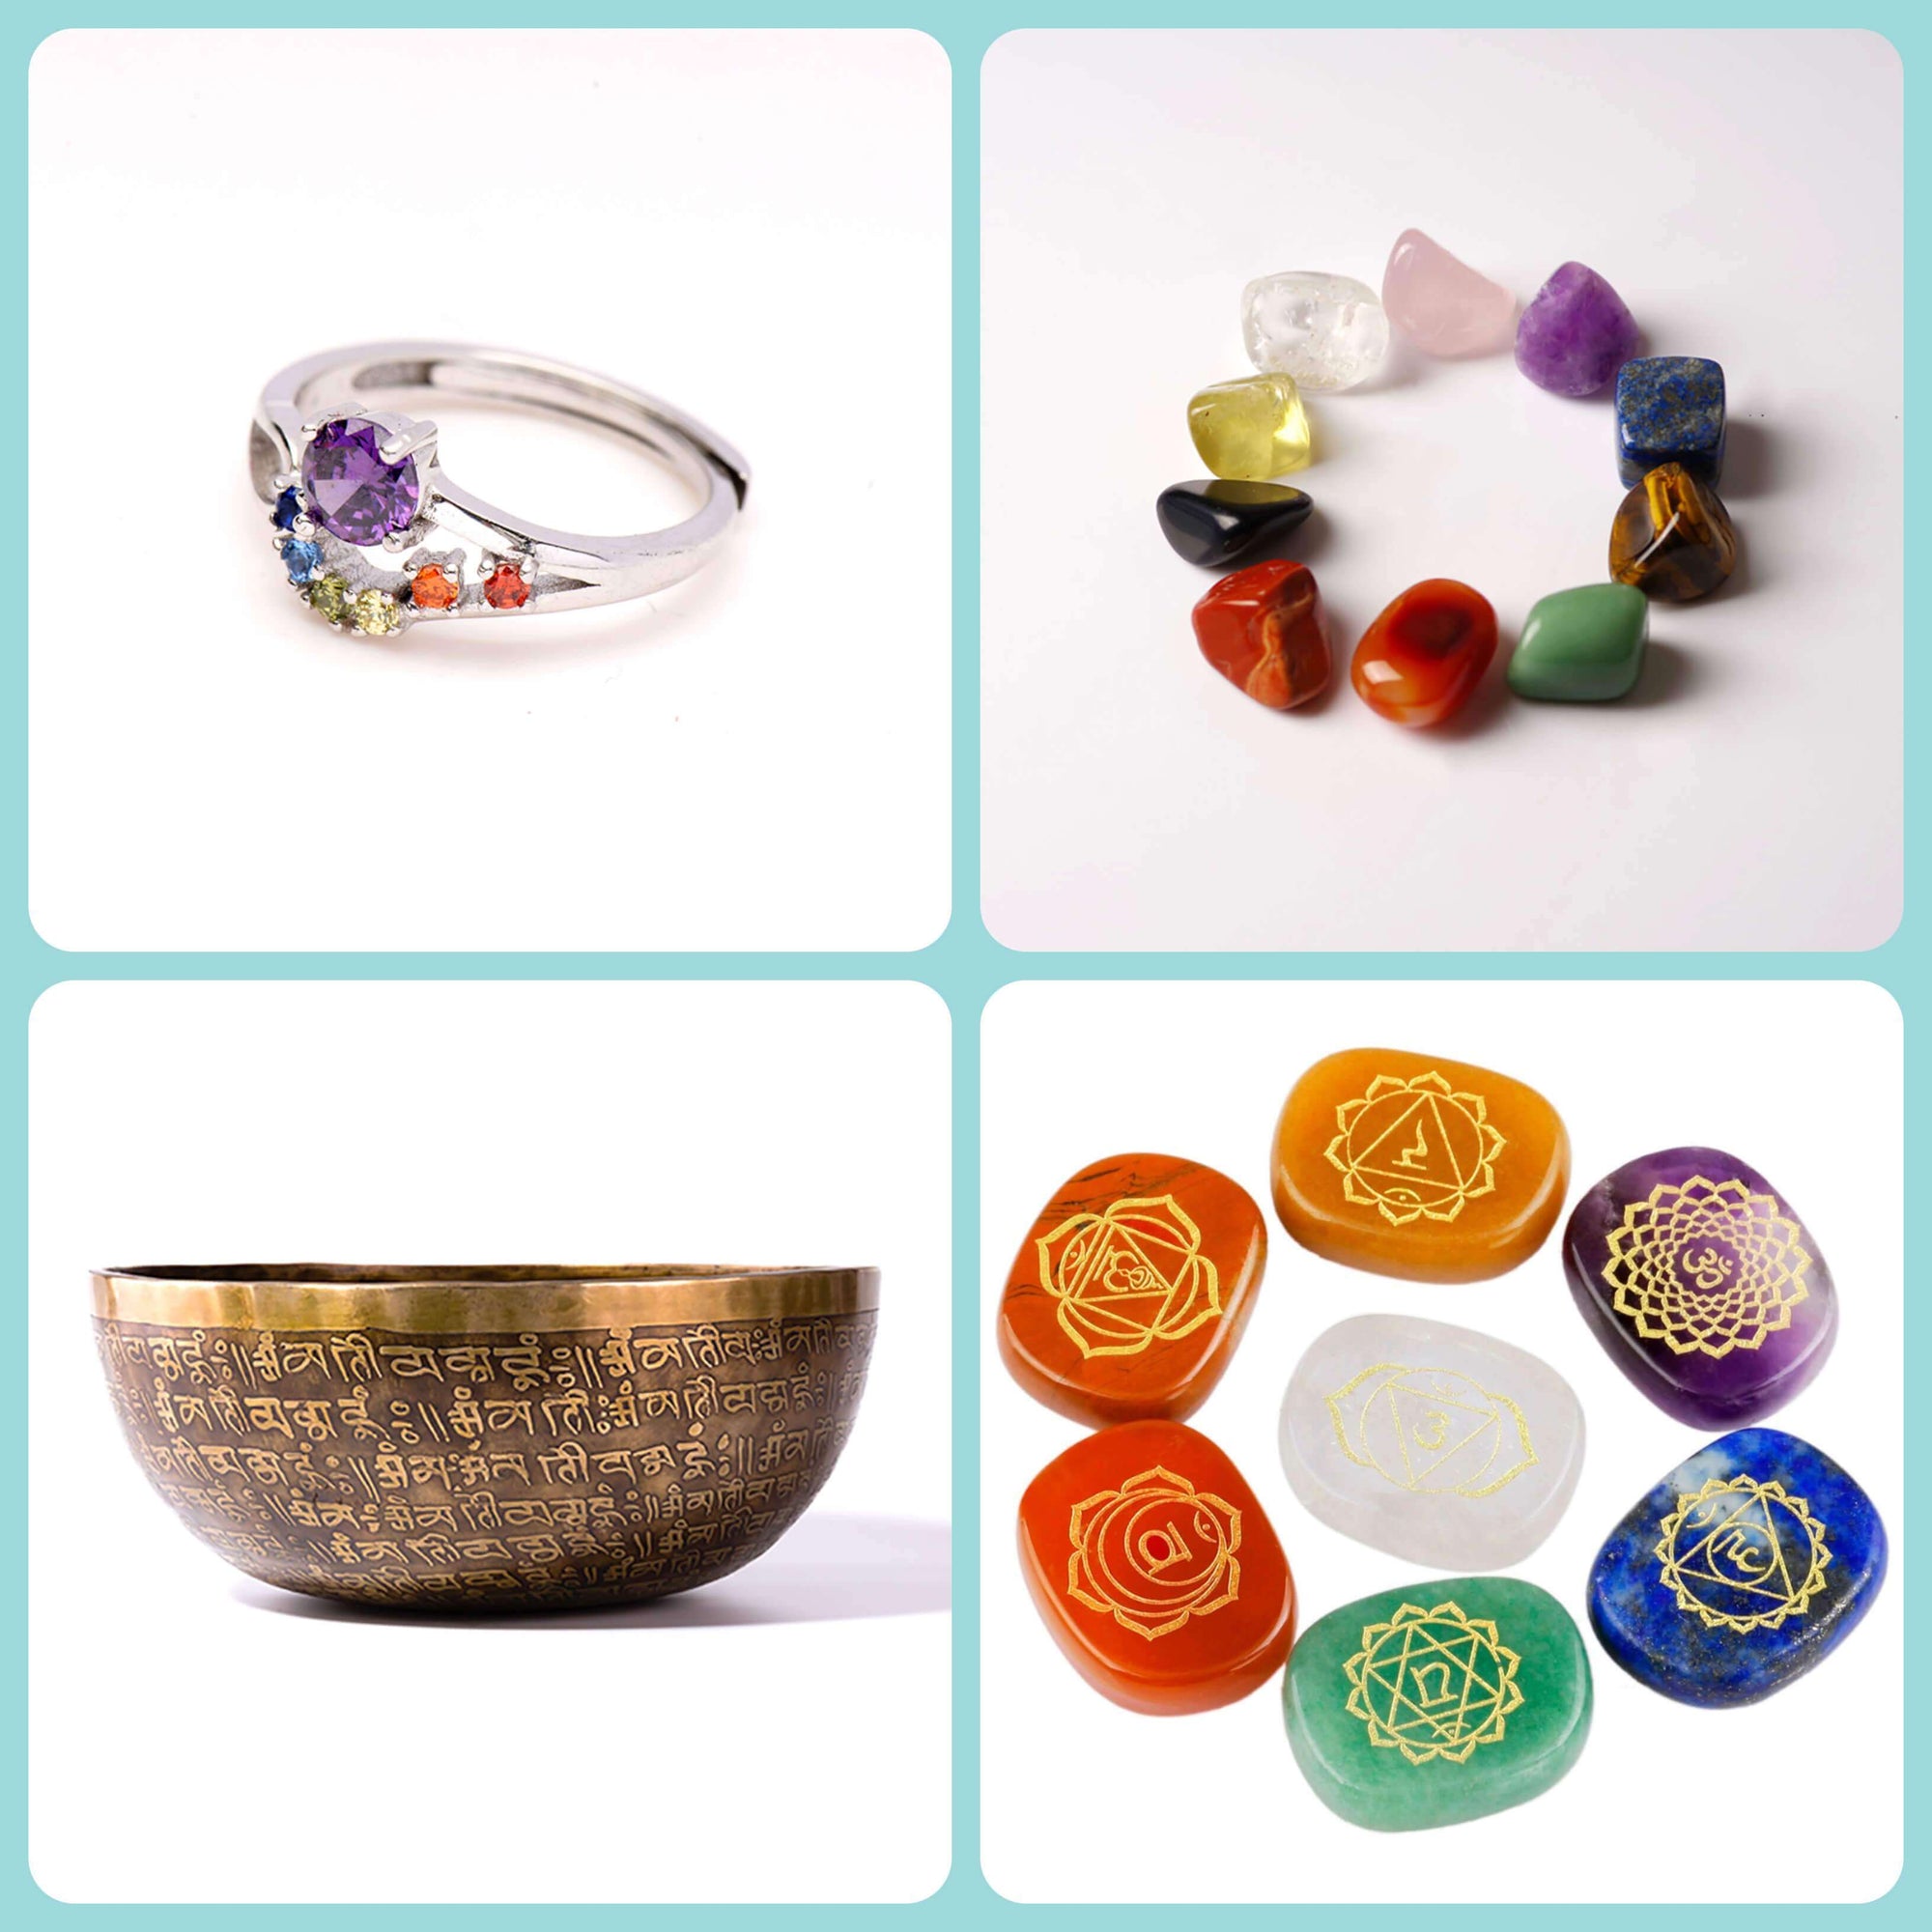 Chakra Reiki jewelry and items